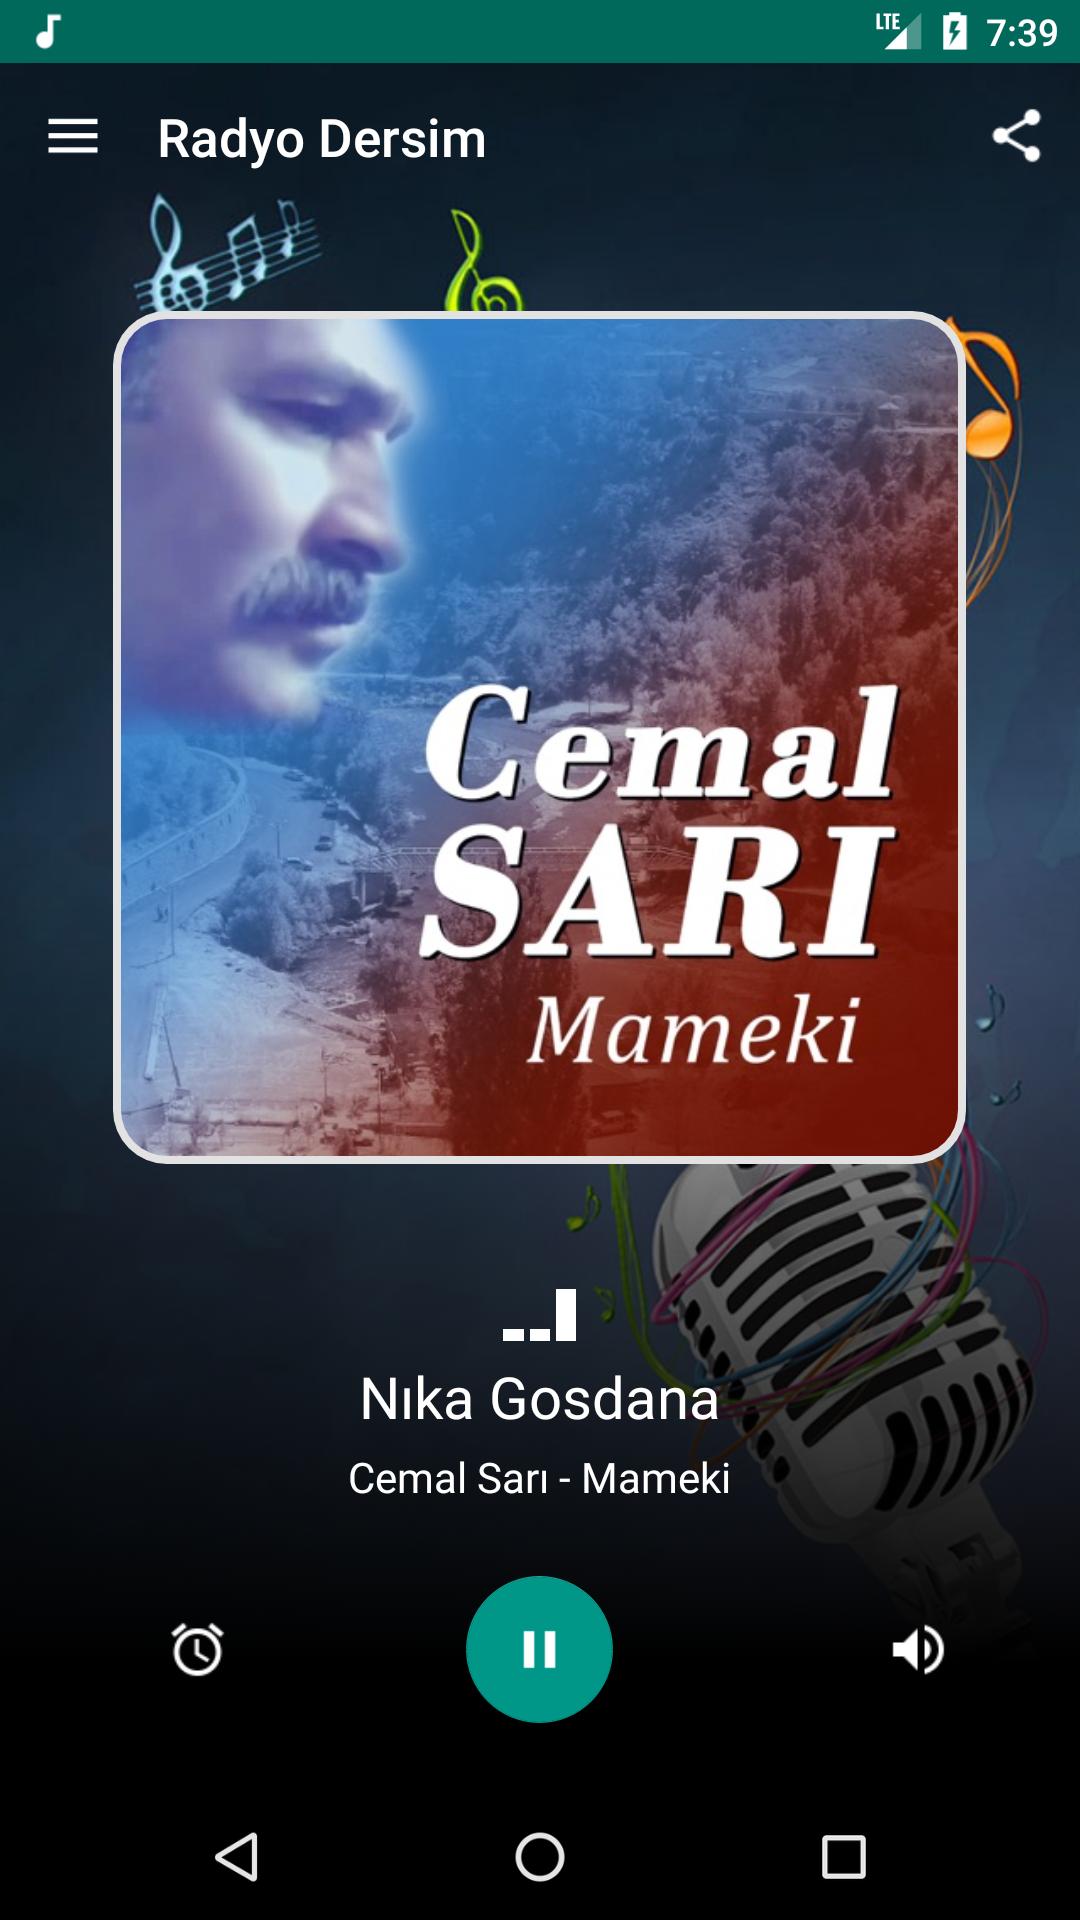 Radyo Dersim APK for Android Download